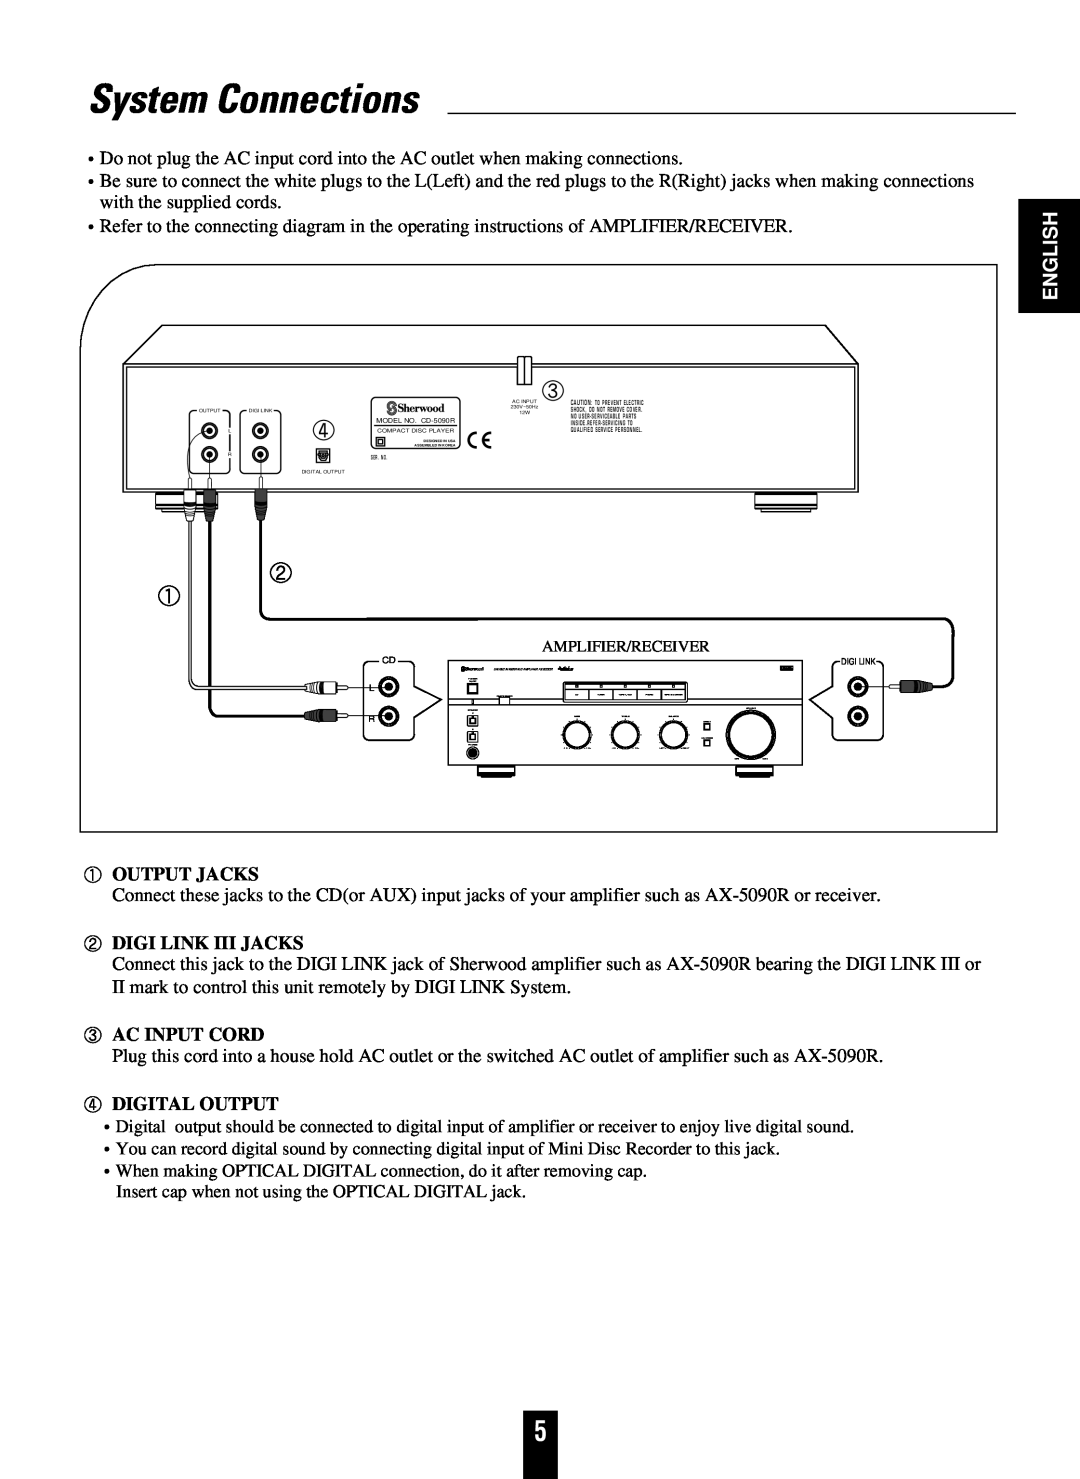 Sherwood CD-5090C/R System Connections, Output Jacks, Digi Link Iii Jacks, Ac Input Cord, Digital Output, English 